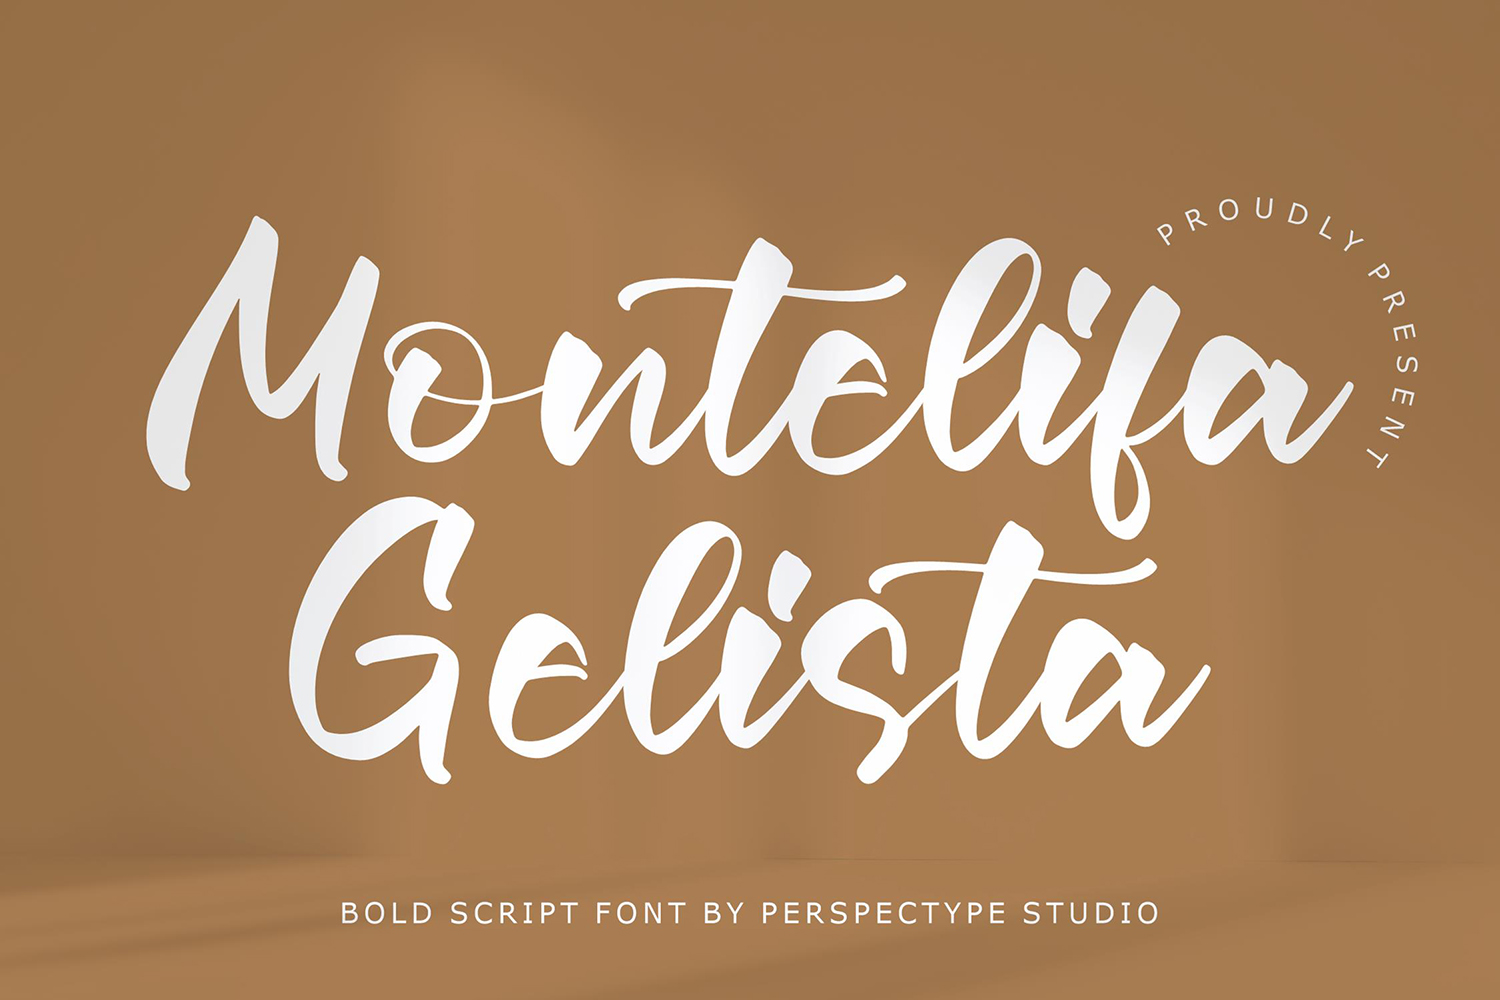 Montelifa Gelista Free Font